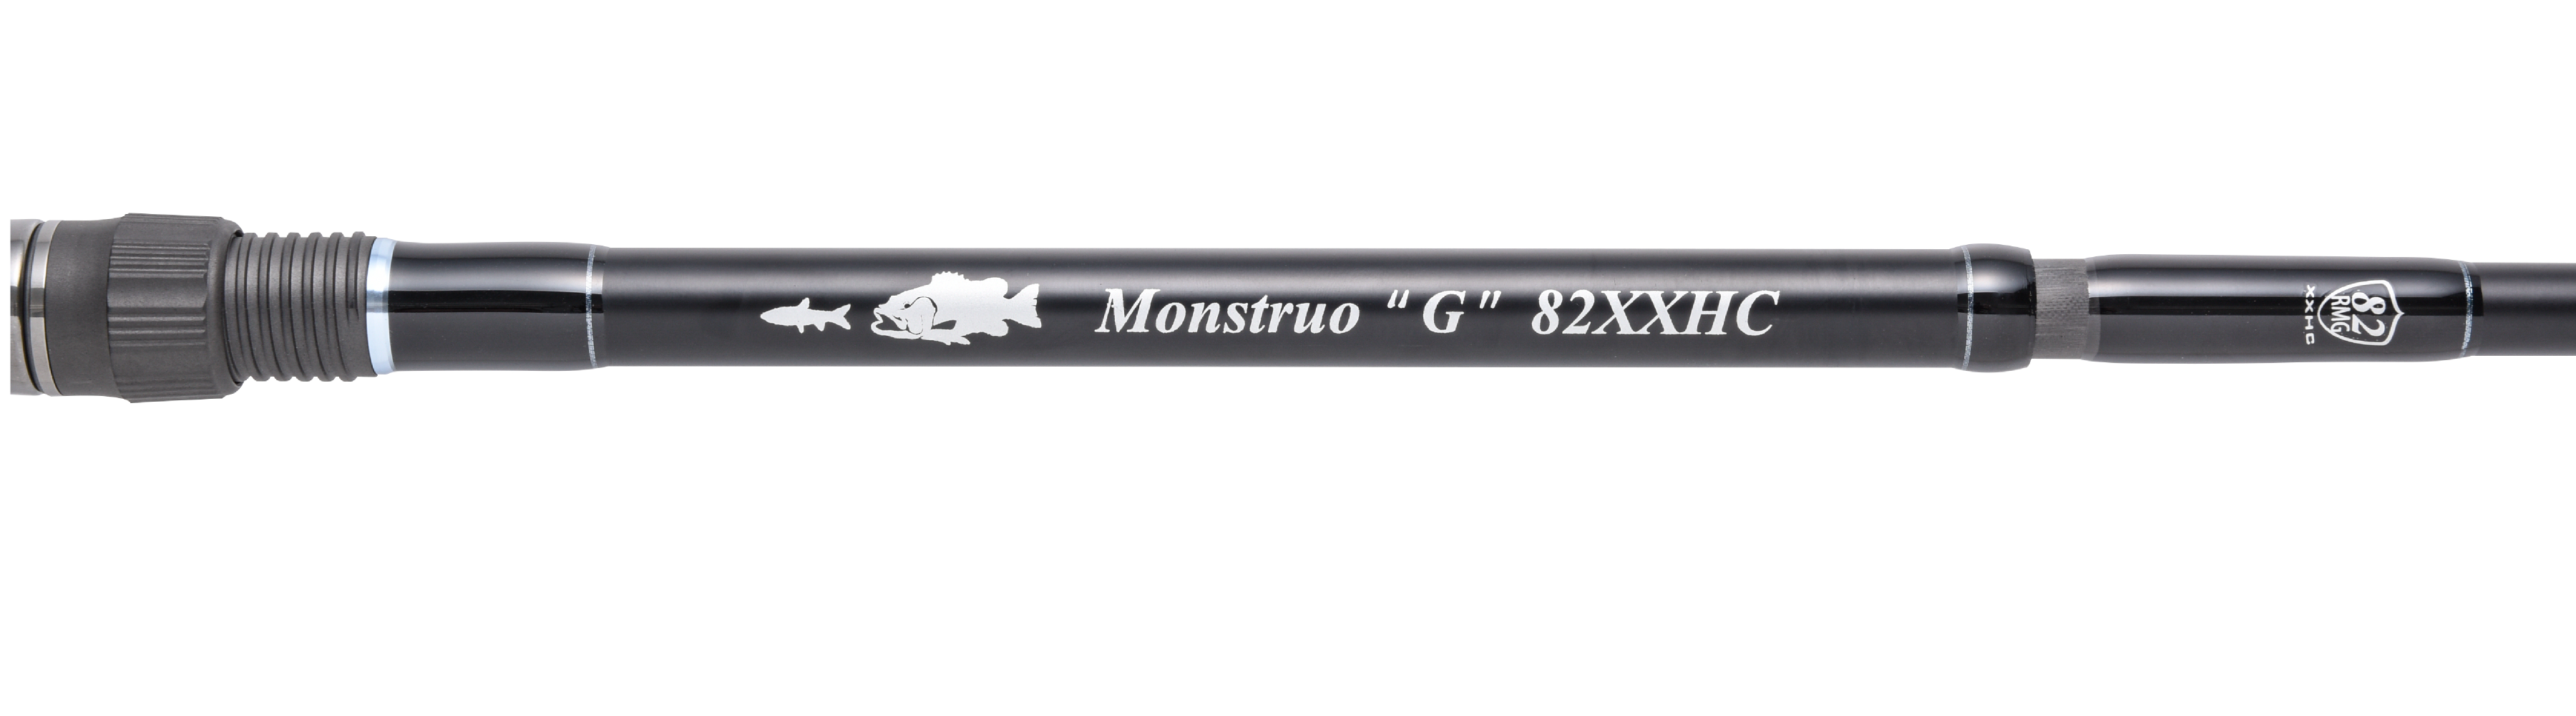 TULALA | Ford every stream | » Monstruo”G” 82XXHC